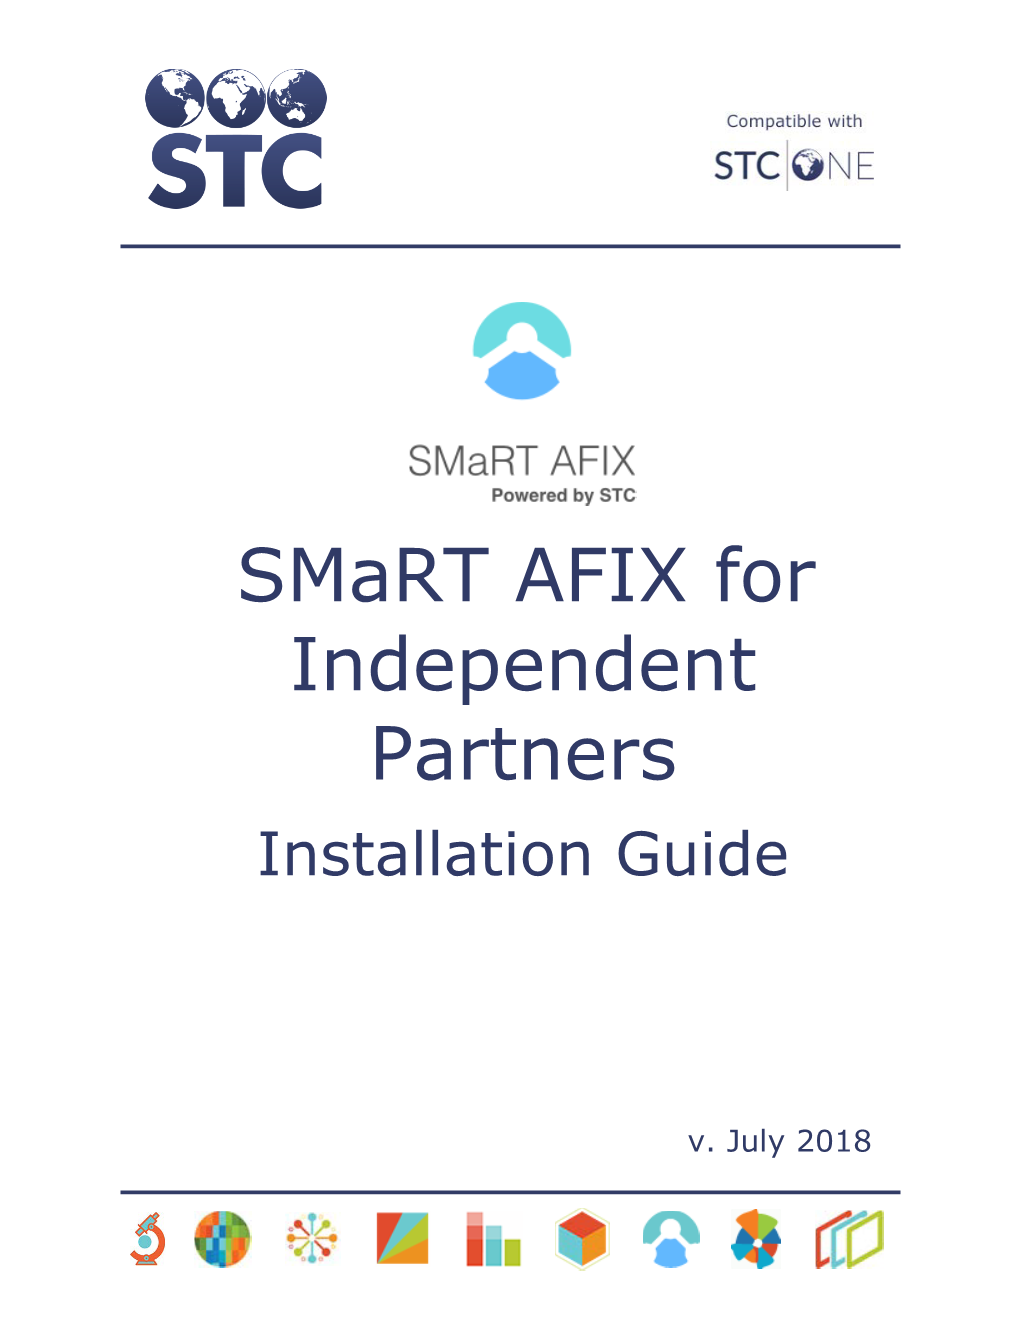 Smart AFIX for Independent Partners Installation Guide